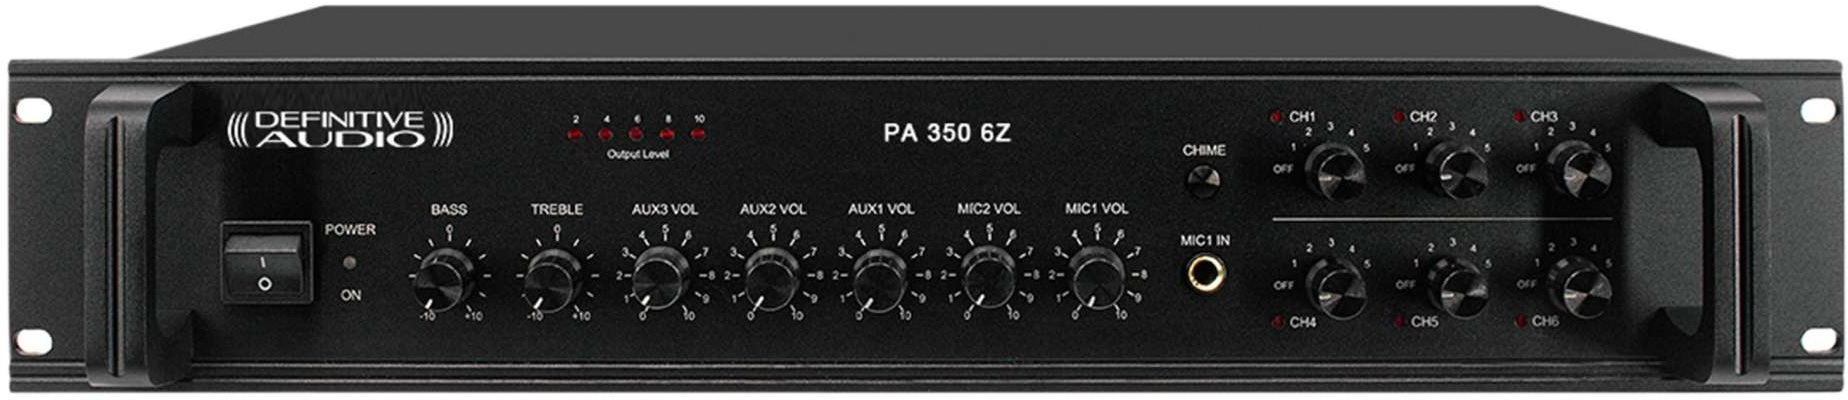 Definitive Audio Pa 350 6z - Ampli Puissance Sono Multi-canaux - Main picture